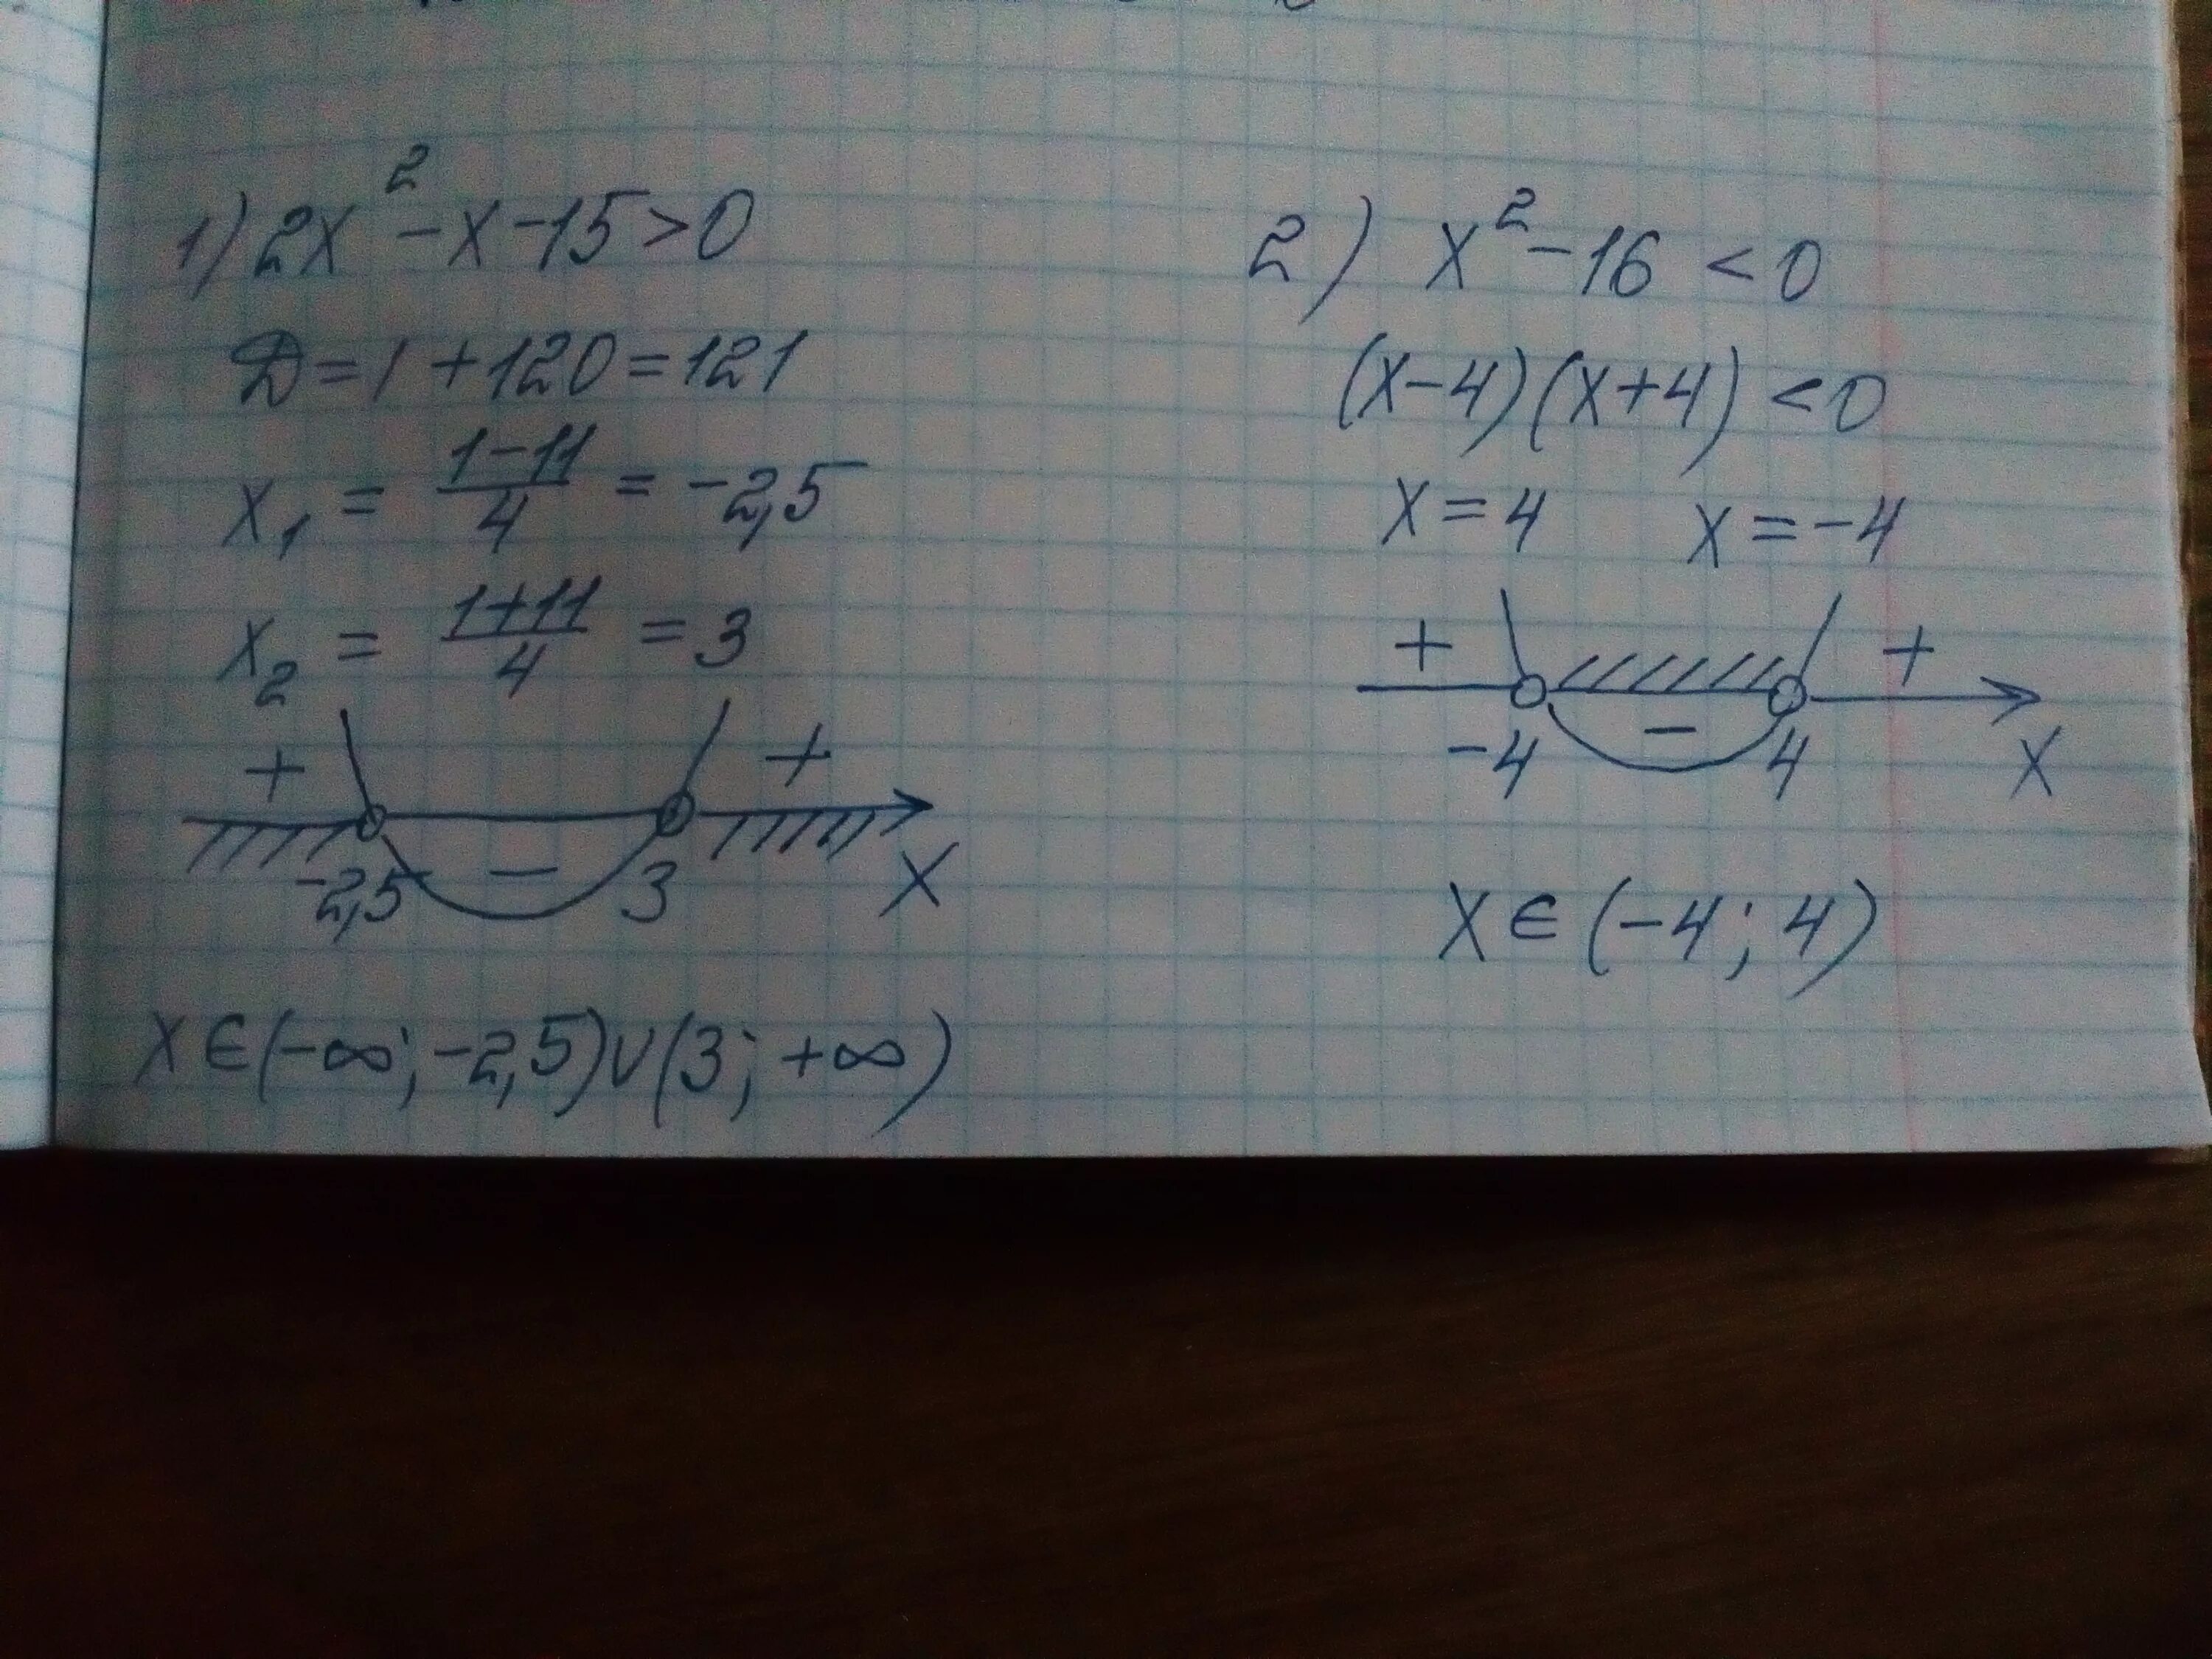 X2-15=2x. X2-2x-15=0. X X + = 2 15.. X2+15x>0. 15x 2x 1 0